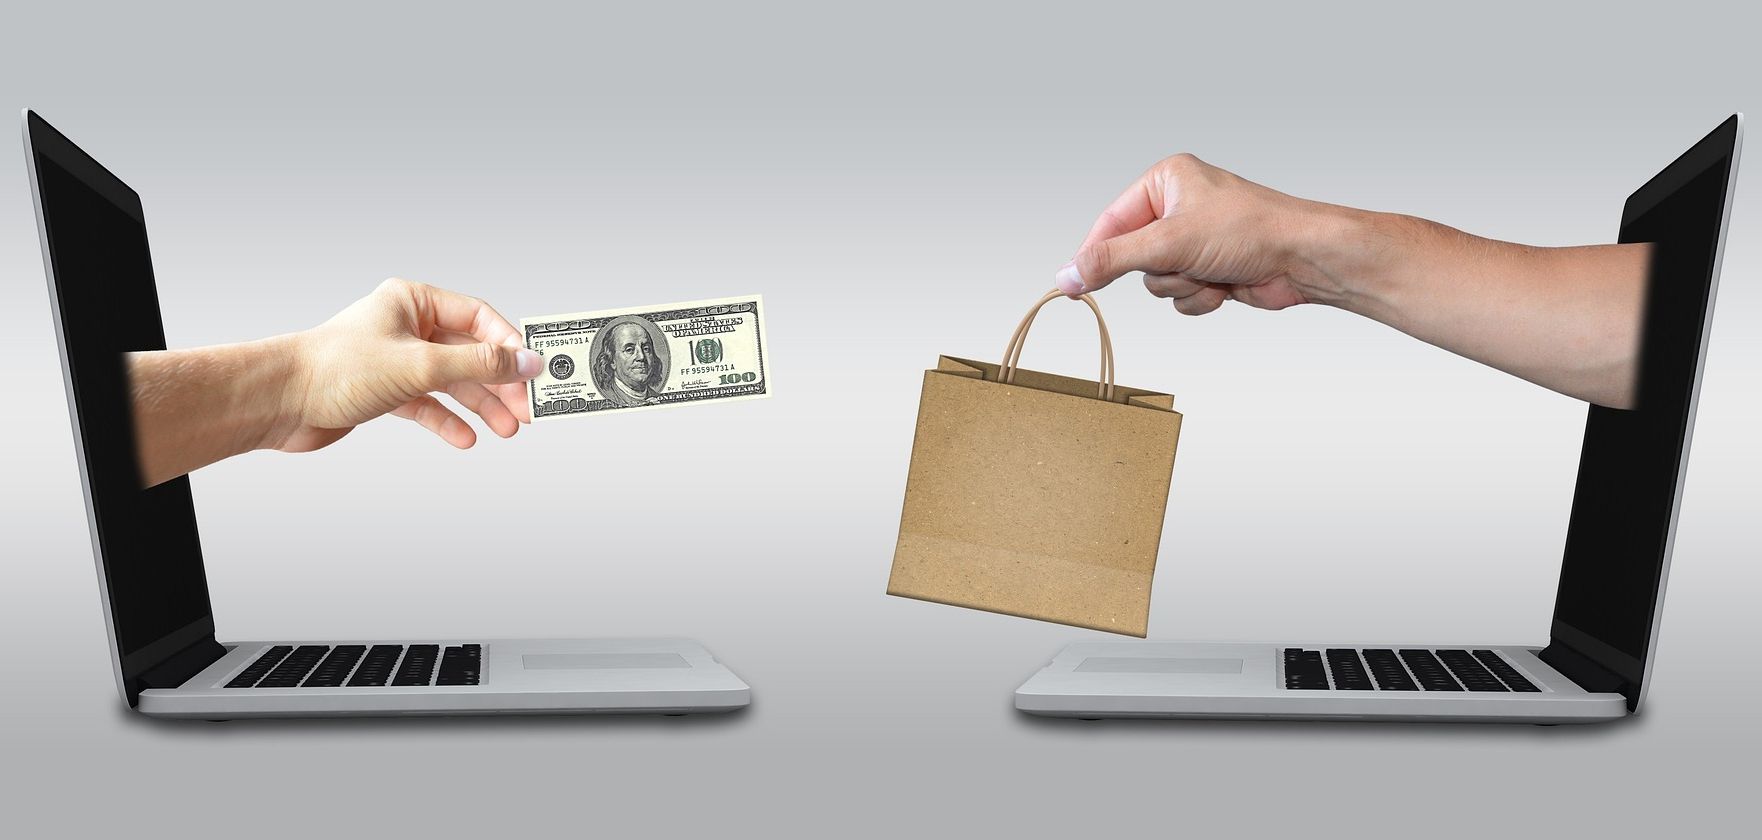 two laptops facilitating shopping transaciton